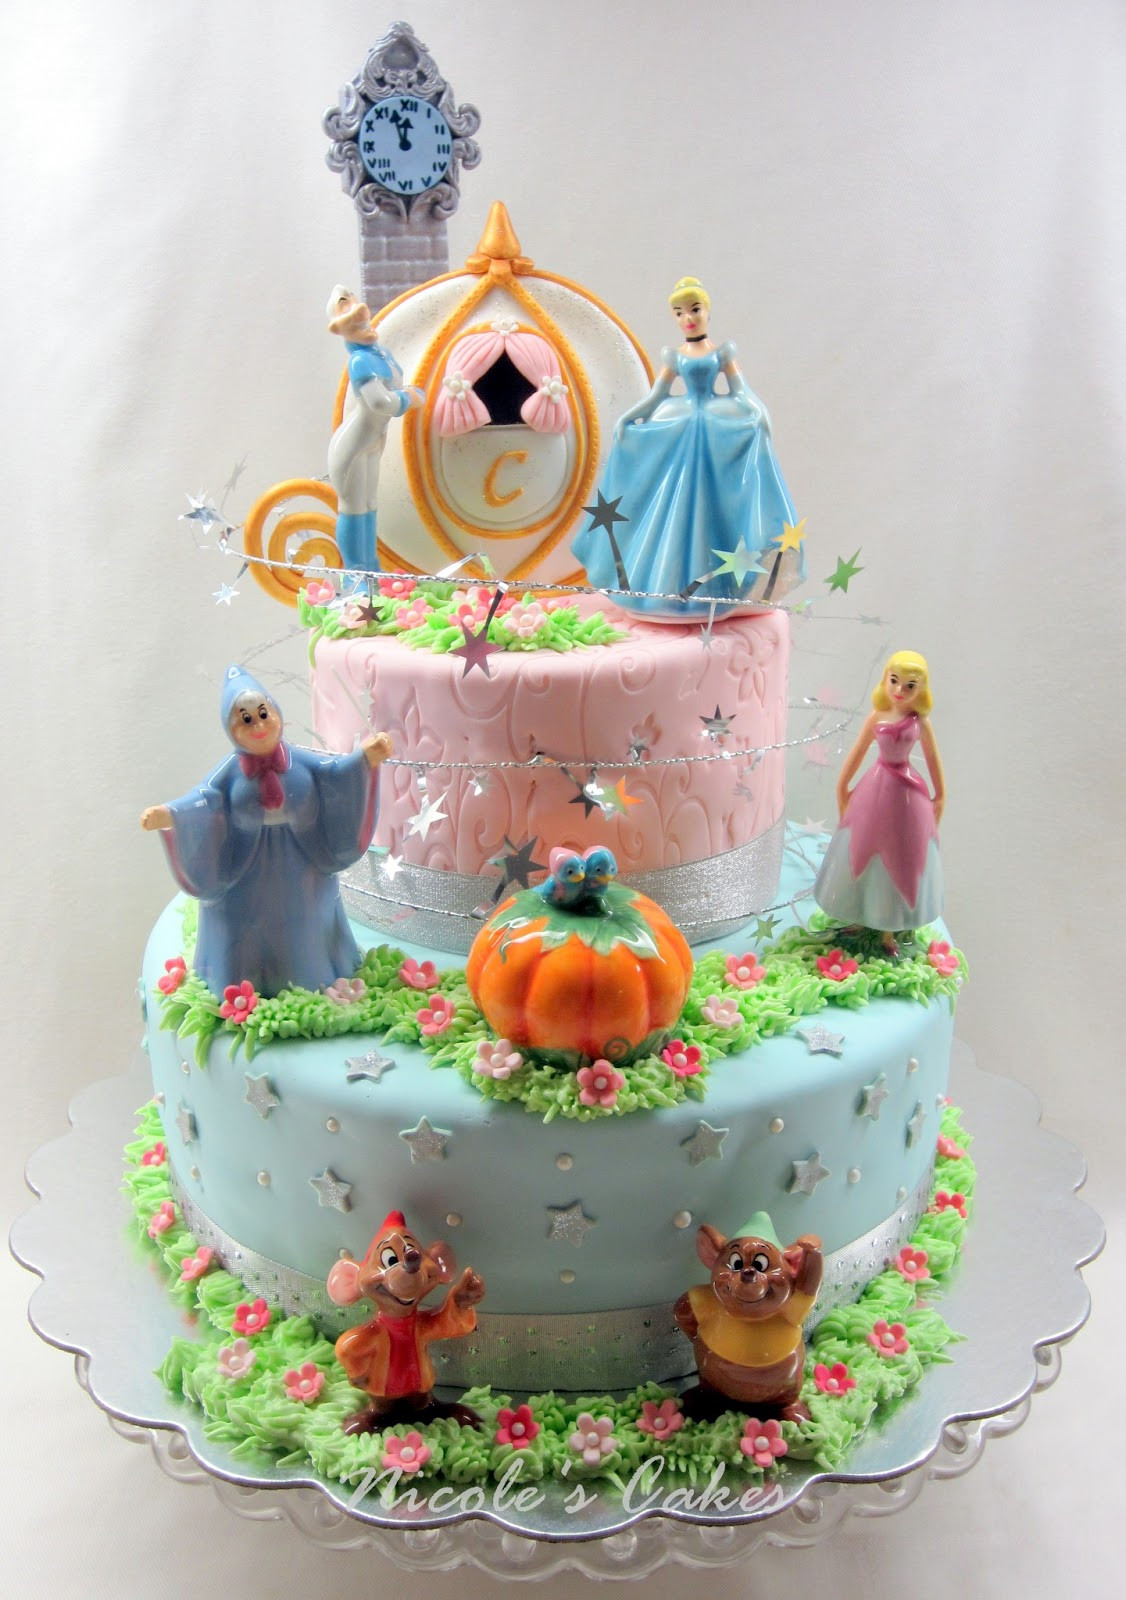 Cinderella Birthday Cakes
 Birthday Cakes The Cinderella Story A Birthday Cake